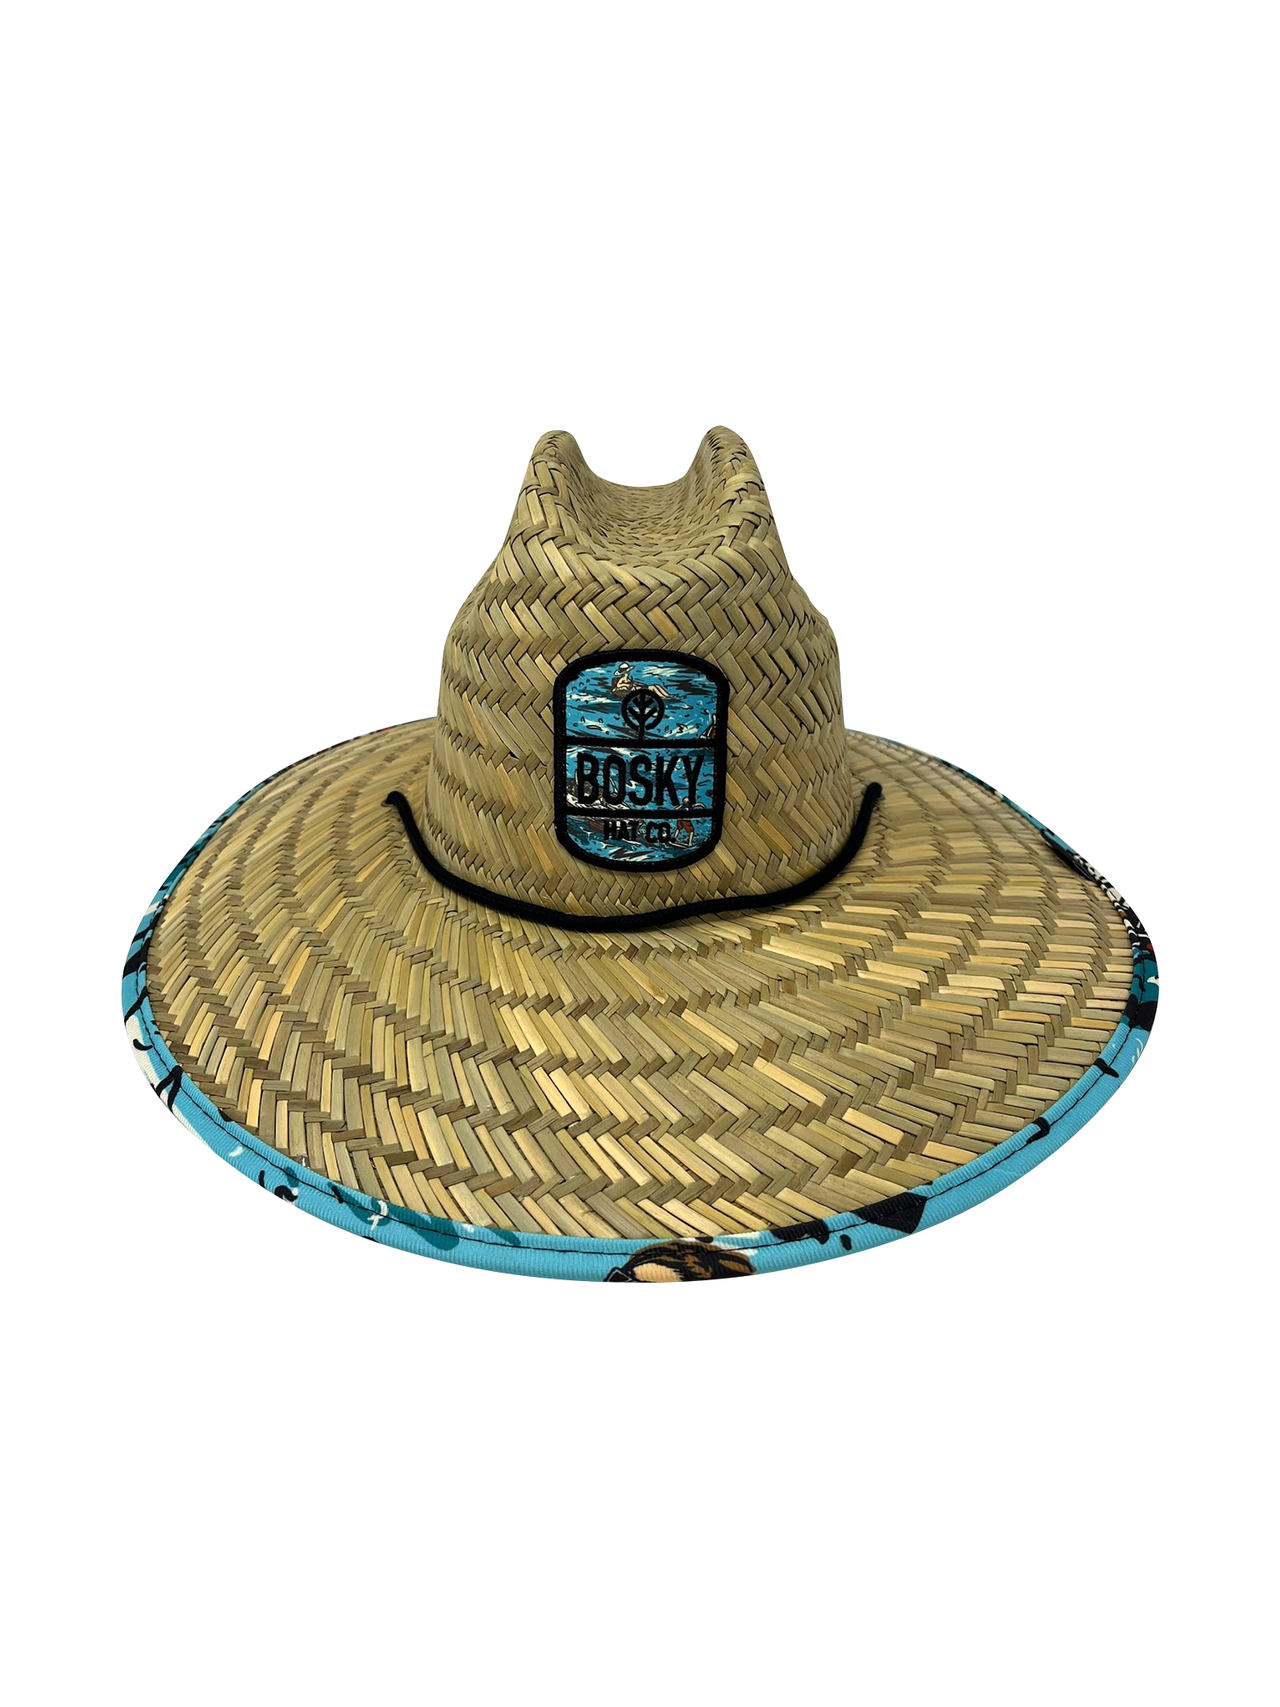 River Rat Straw Hat